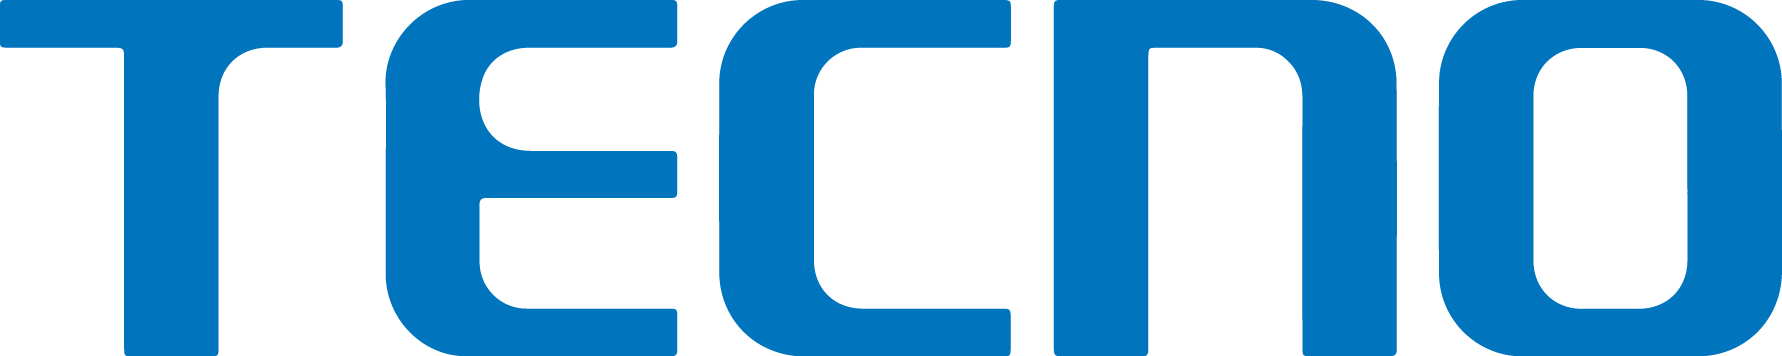 Логотип Tecno